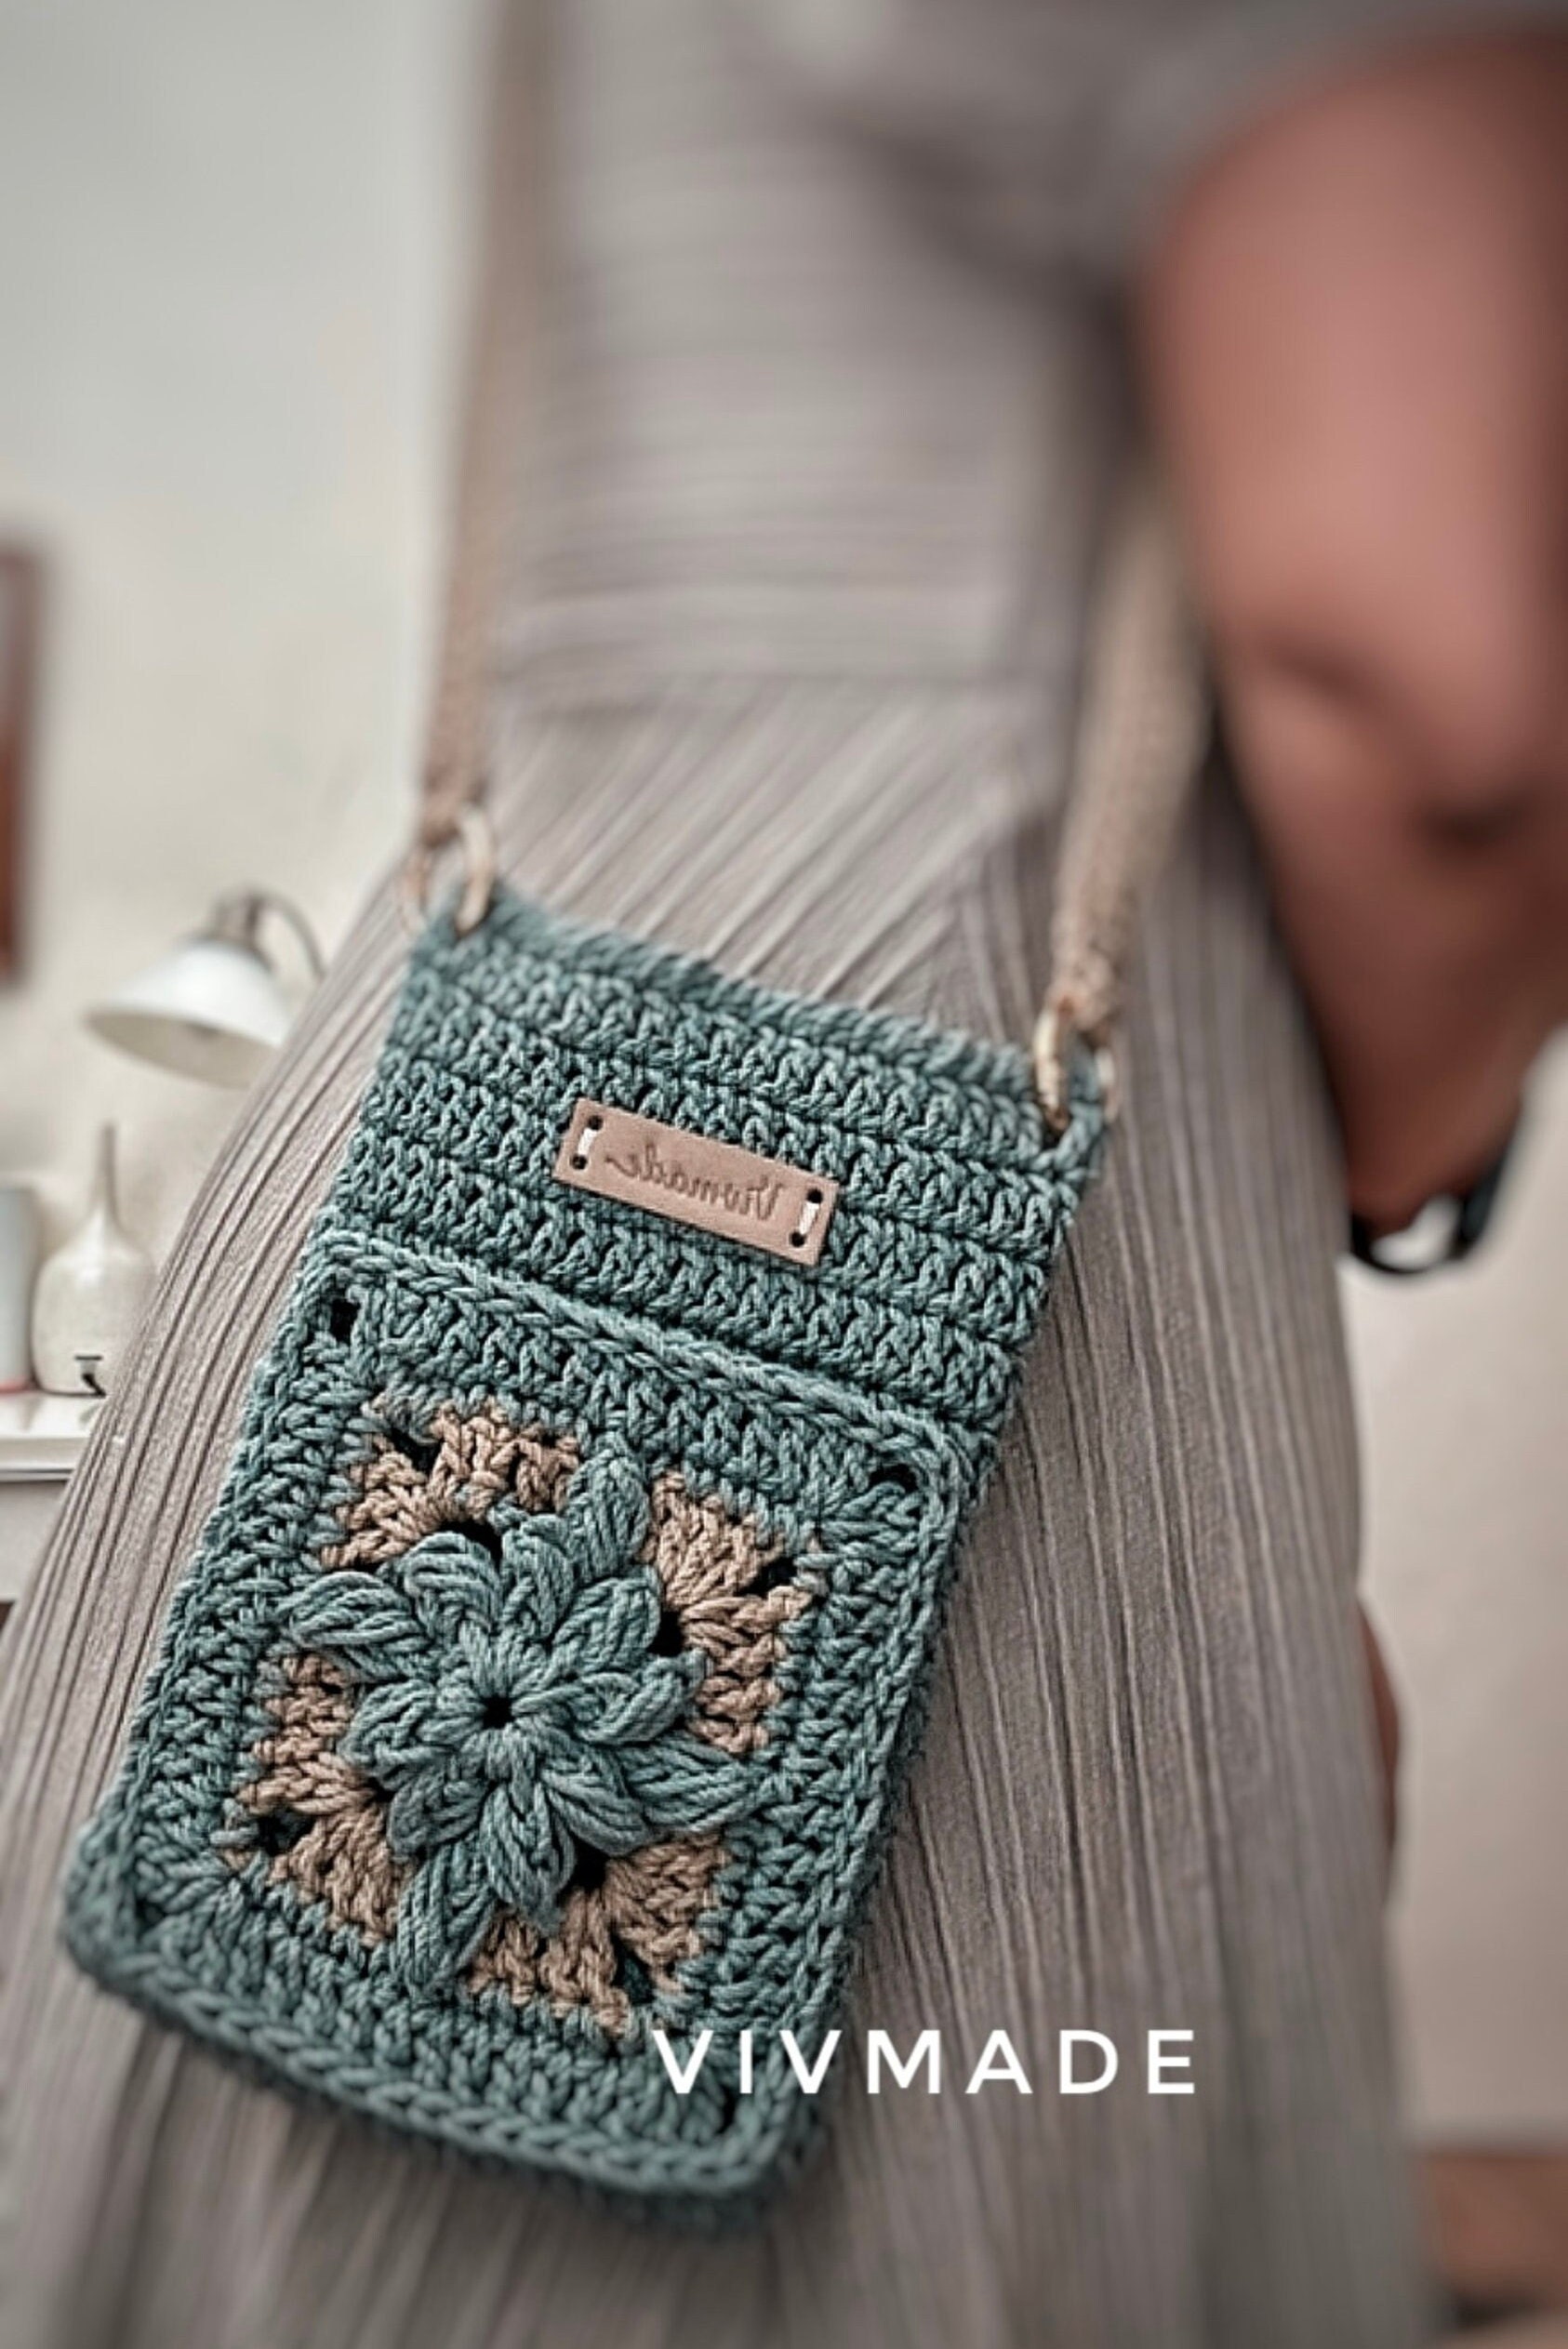 Crochet Phone Bag With Pocket Pattern PDF Crochet Bag 